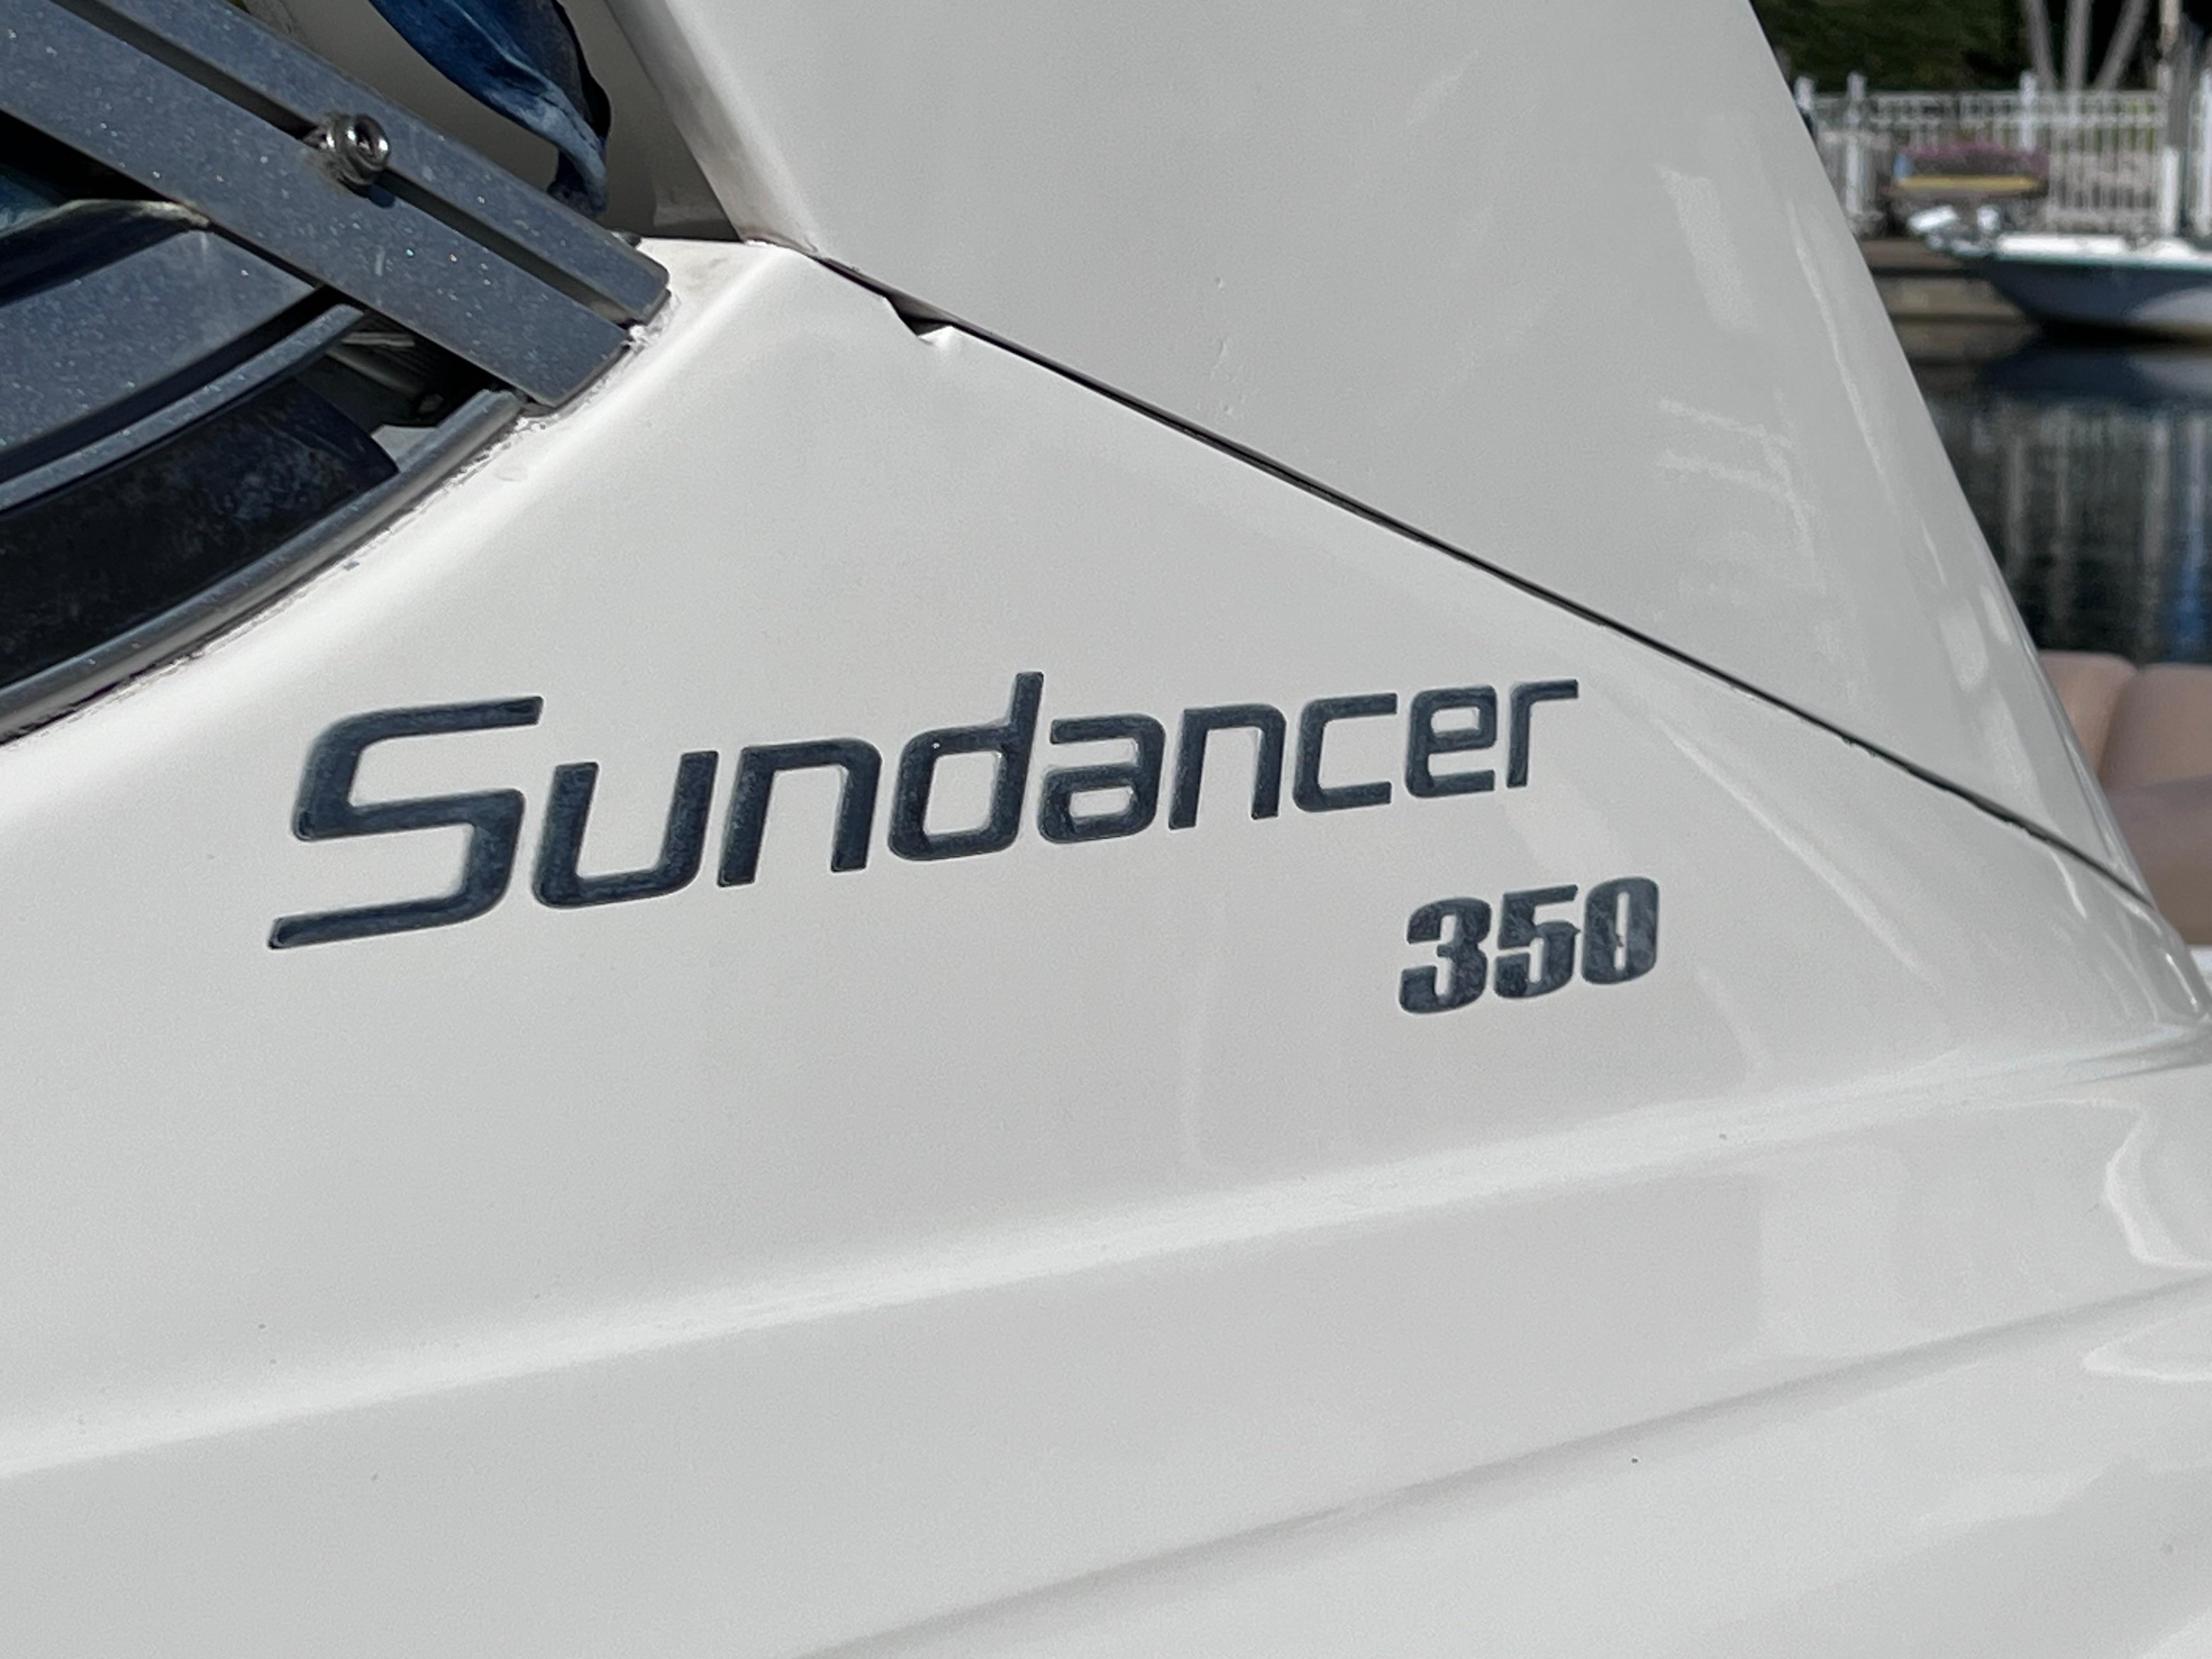 2016 Sea Ray 350 Sundancer